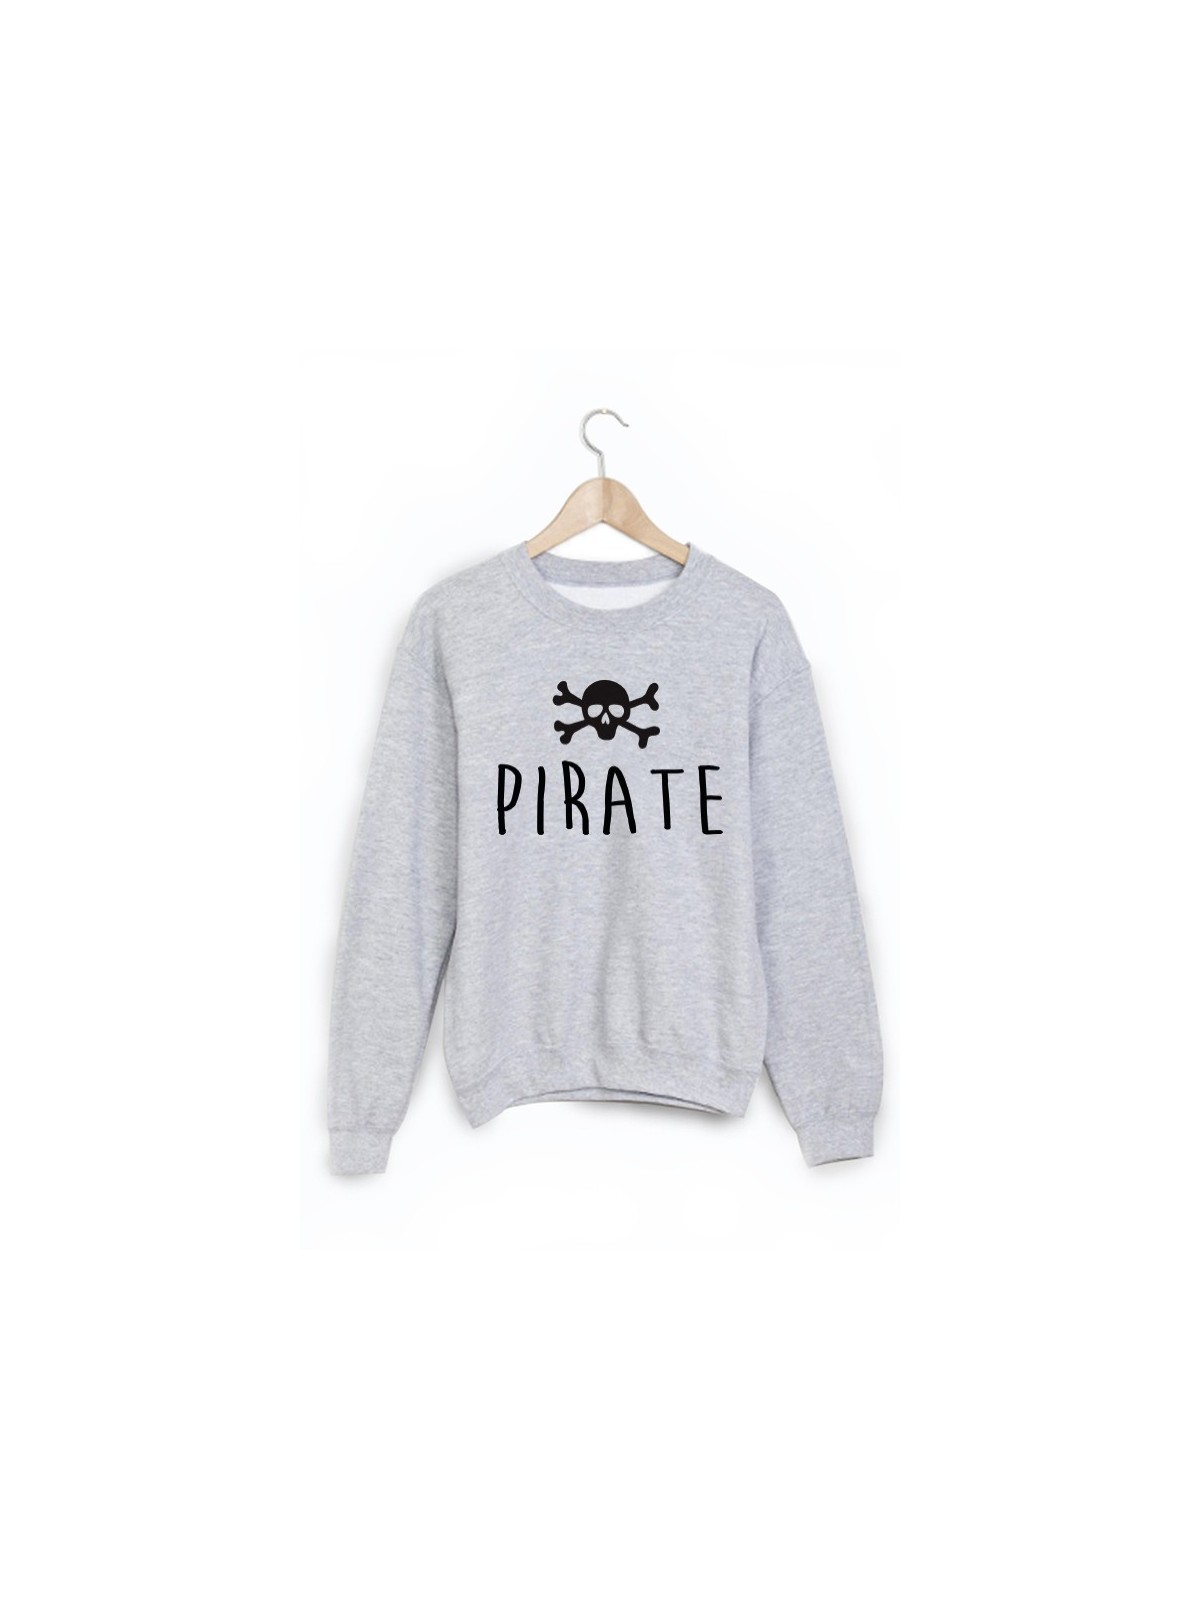 Sweat-Shirt pirate ref 899